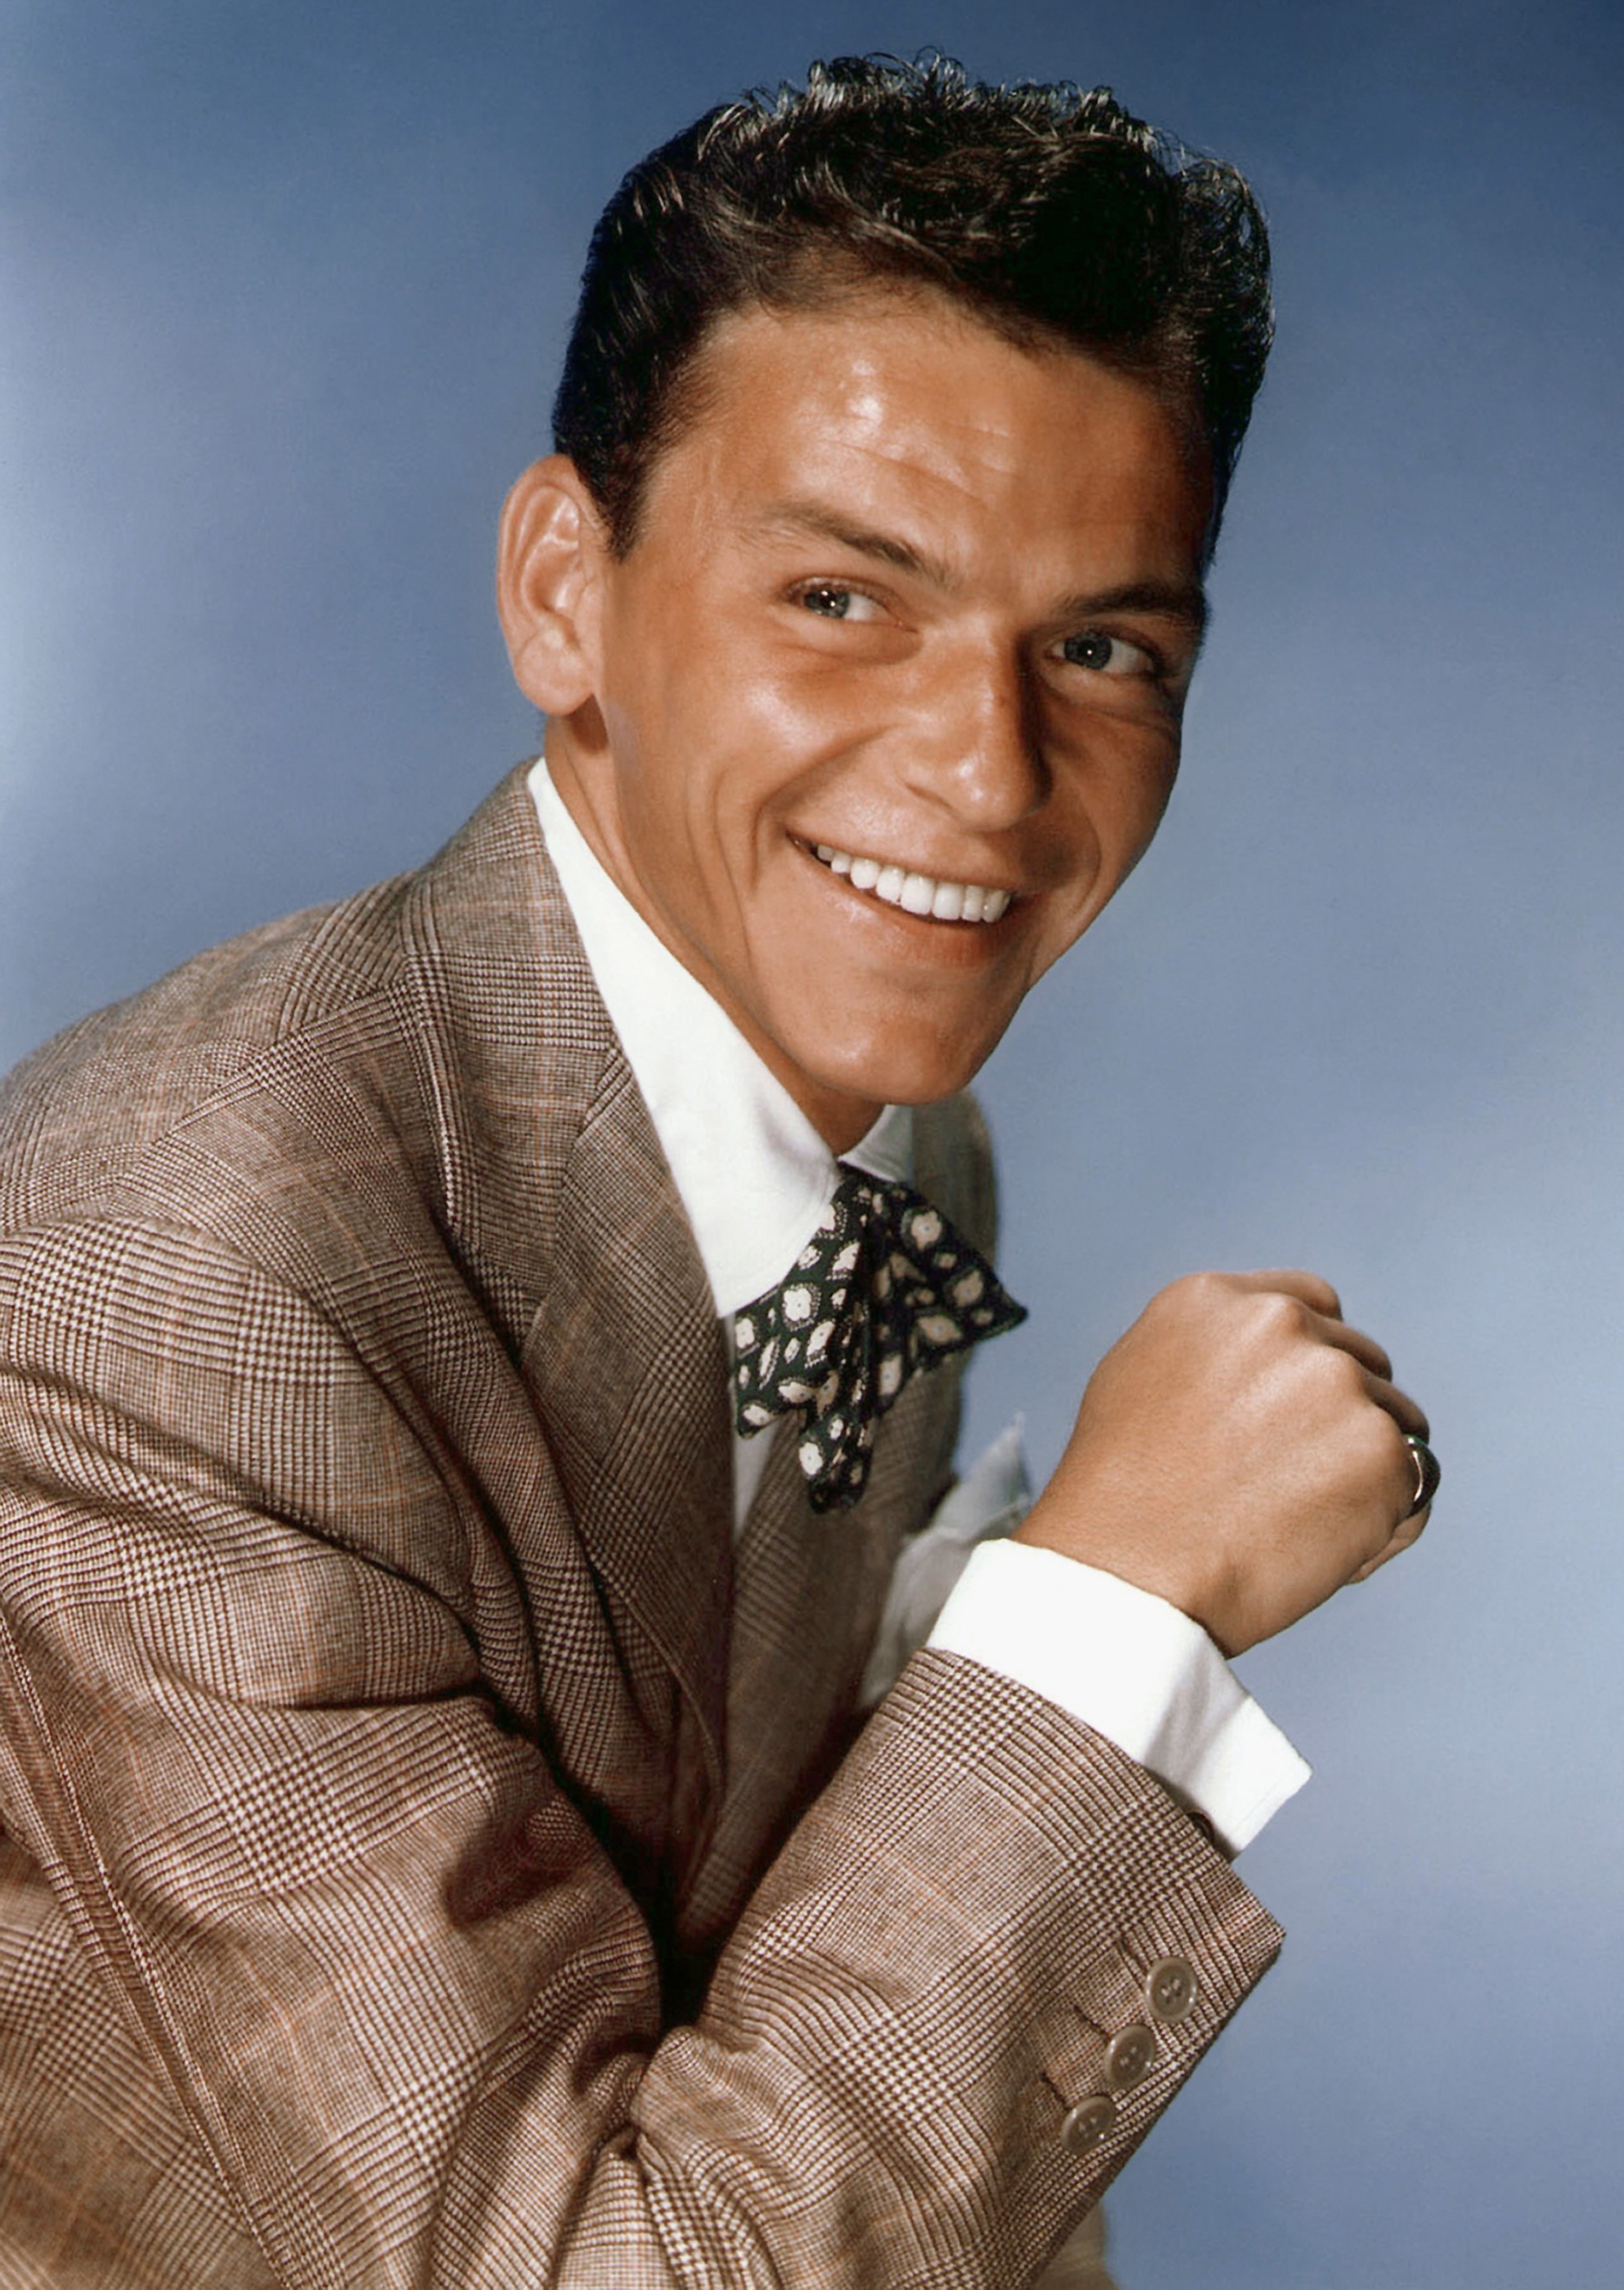 Sinatra posing for a portrait in 1944